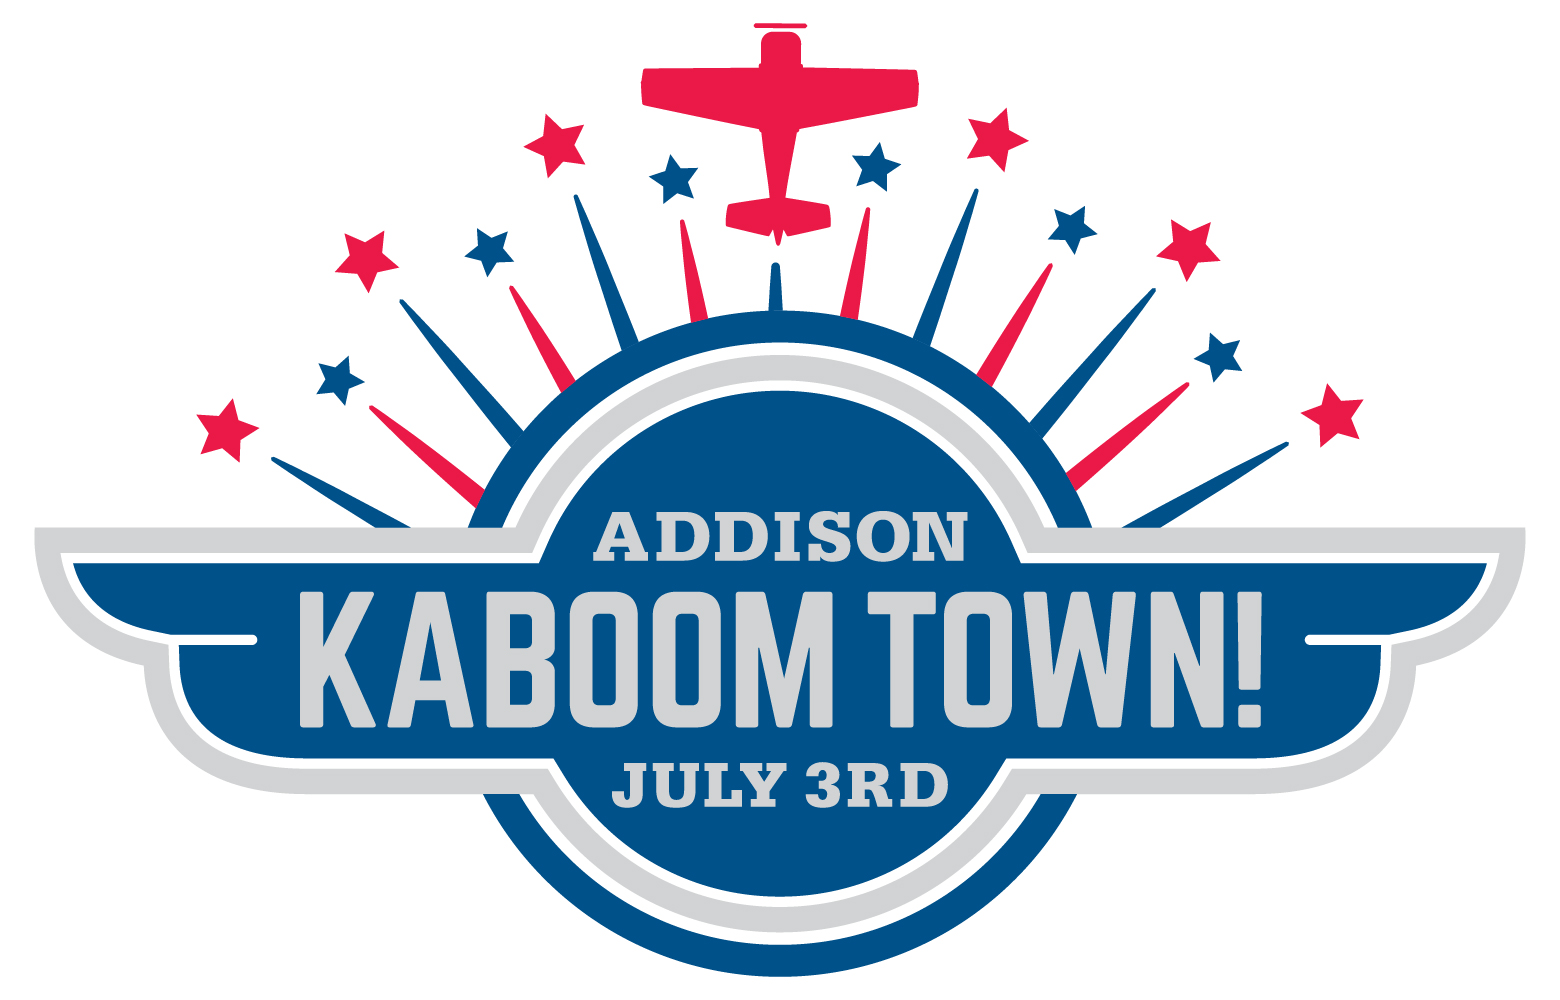 Addison Kaboom Town!